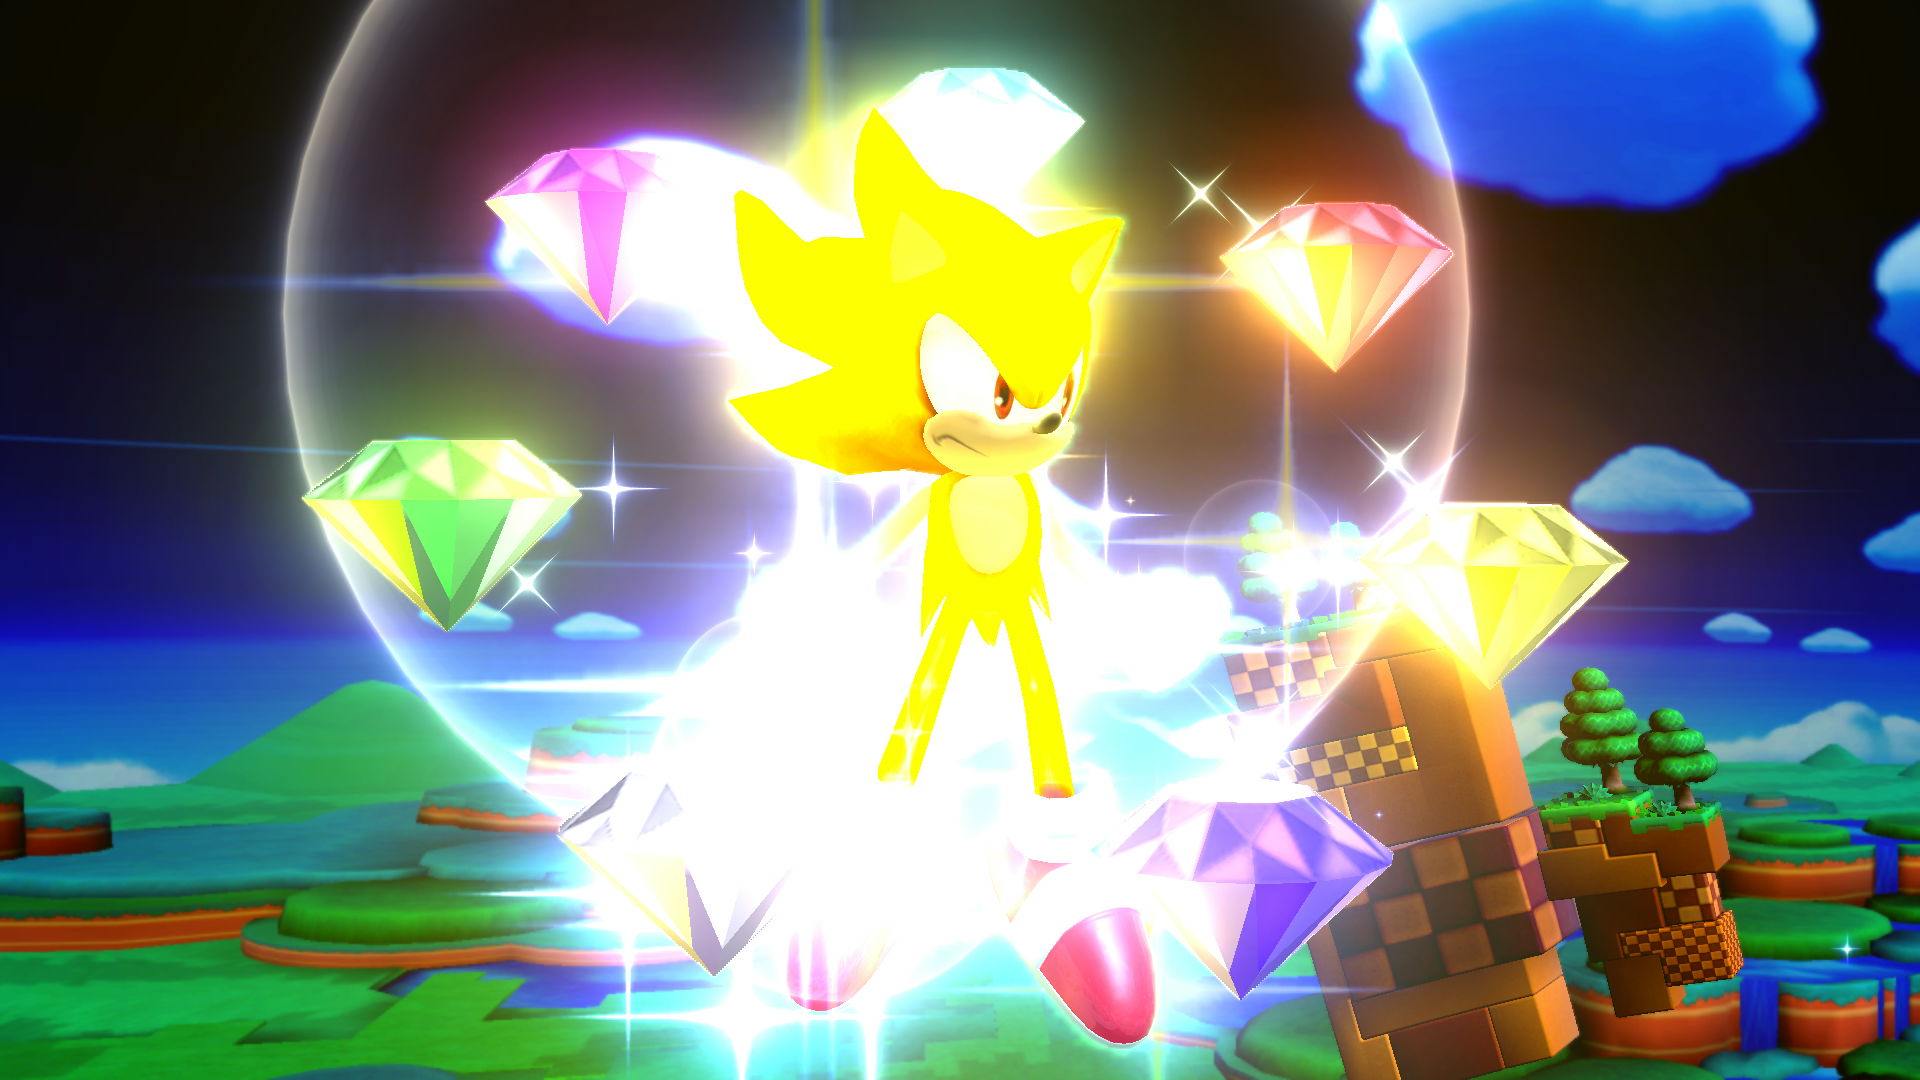 Definitive Super Sonic in Adventure 2! 